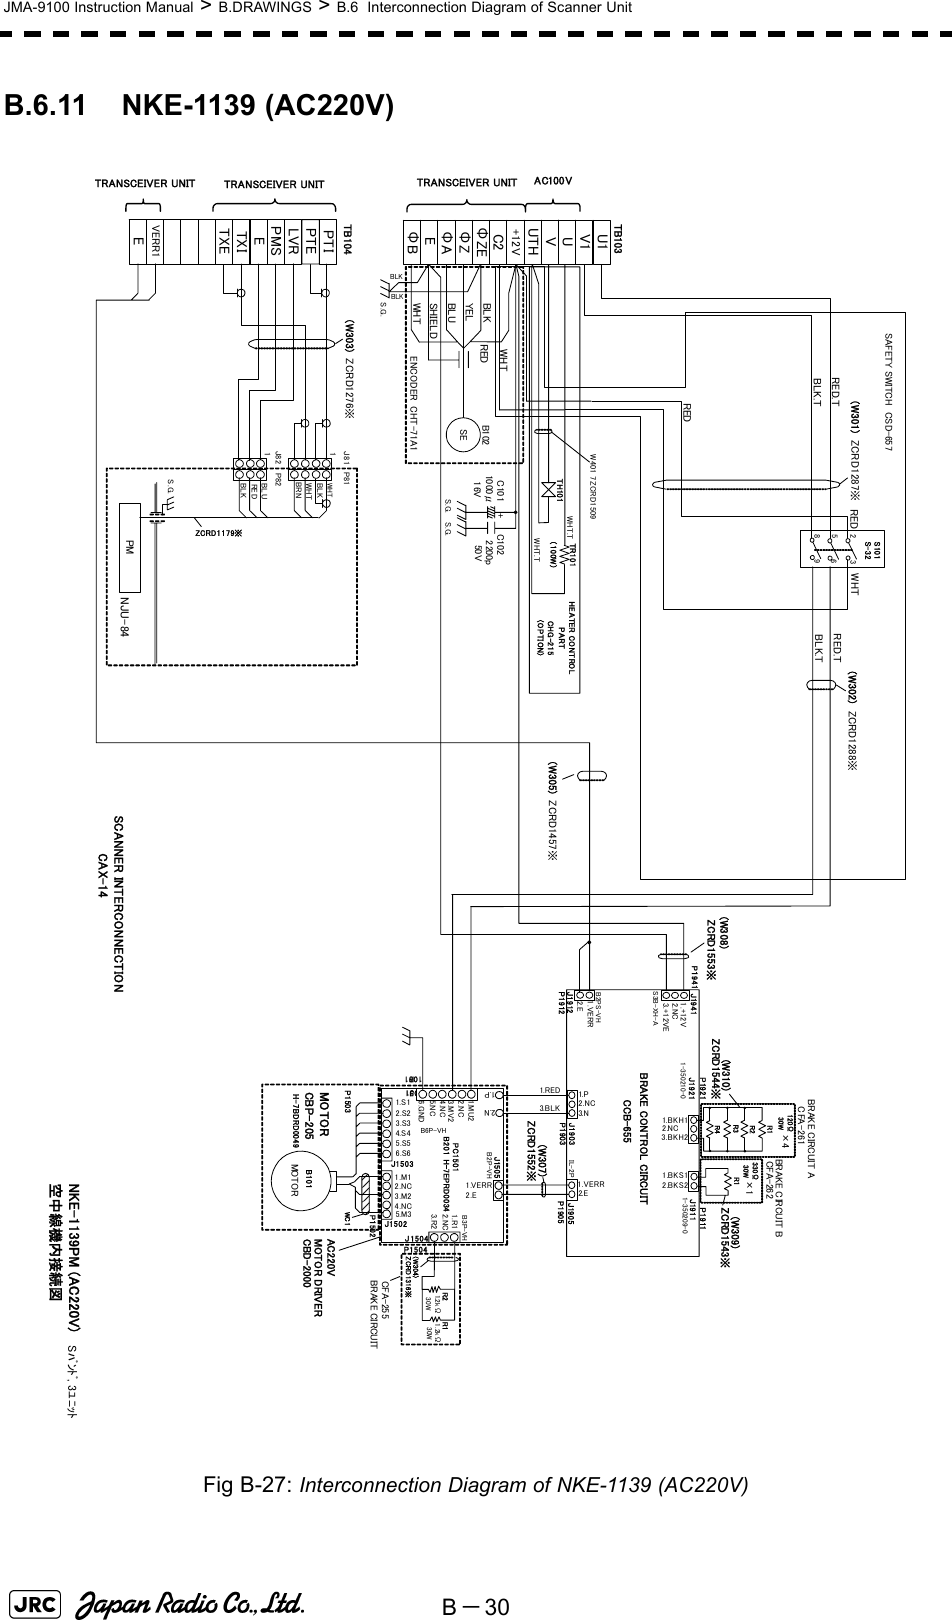 B－30JMA-9100 Instruction Manual &gt; B.DRAWINGS &gt; B.6  Interconnection Diagram of Scanner UnitB.6.11 NKE-1139 (AC220V)Fig B-27: Interconnection Diagram of NKE-1139 (AC220V) NKE-1139PM (AC220V)空中線機内接続図SCANNER INTERCONNECTION CAX-14U1V1S101S-32239568RED.TBLK.T（W301) ZCRD1287※ RED WHTRED.TBLK.T（W302) ZCRD1288※SAFETY SWITCH CSD-657HEATER CONTROL PARTCHG-215(OPTION)TRANSCEIVER UNITWHT+12VC2ΦZEΦZΦAEΦBREDSHIELDYELBLUWHTSEB1 02ENCODER CHT-71A1C102C1012200p50V1000μ16V+BLKTB103BLKBLKAC100VUTHUVTH101TR101（100W）WHT.TTXITXEVERR1ELVRPMSETB104REDS.G.S.G.S.G.Sﾊﾞﾝﾄﾞ, 3ﾕﾆｯﾄ（W305) ZCRD1457※PTEPTIW401 7ZCRD1509WHT.TJ82J81 P81P82WHTBLKBLURE DBLKWHTBRN11PMNJU-84ZCRD1179※（W303) ZCRD1276※S.G.TRANSCEIVER UNIT TRANSCEIVER UNIT1.VERR2.E1.VERR2.E1.P2.NC3.N 1.B K H 13.BKH21.BKS12.BKS21.+12V2.NC3.+12VEP1941 J1941J1903P1903J1905P1905J1912P1912BRAKE CONTROL CIRCUITCCB-655J1921P1921J1911P19111.RED3.BLKIL-2PB2PS-VHS3B-XH-A1-350210-0 1-350209-0ZCRD1553※ZCRD1552※(W307)ZCRD1543※(W309)ZCRD1544※(W310)CBD-2000(W304)ZCRD 1316※BRAKE CIRCUITCFA-255R1R21.2kΩ30W1.2kΩ30WP1504J15011.R13.R2H-7EPRD0034B201J1504J1505PC1501P1501B3P-VH2.NCB2P-VH1.P2.NP1502AC220VWC 1CBP-205H-7BDRD00492.NC4.NC1.S12.S23.S34.S45.S56.S6J1502J15033.M21.M15.M3P1503MOTORMOTO RB101(W308)MOTOR DRIVERBRA KE C IRCUIT BCFA-262BRAKE CIRCUIT ACFA-261R1R2R3R4R1120Ω30W330Ω30W×4×12.NC3.MV21.MU22.NC4.NC5.NC6.GNDB6P-VH1.VERR2.E